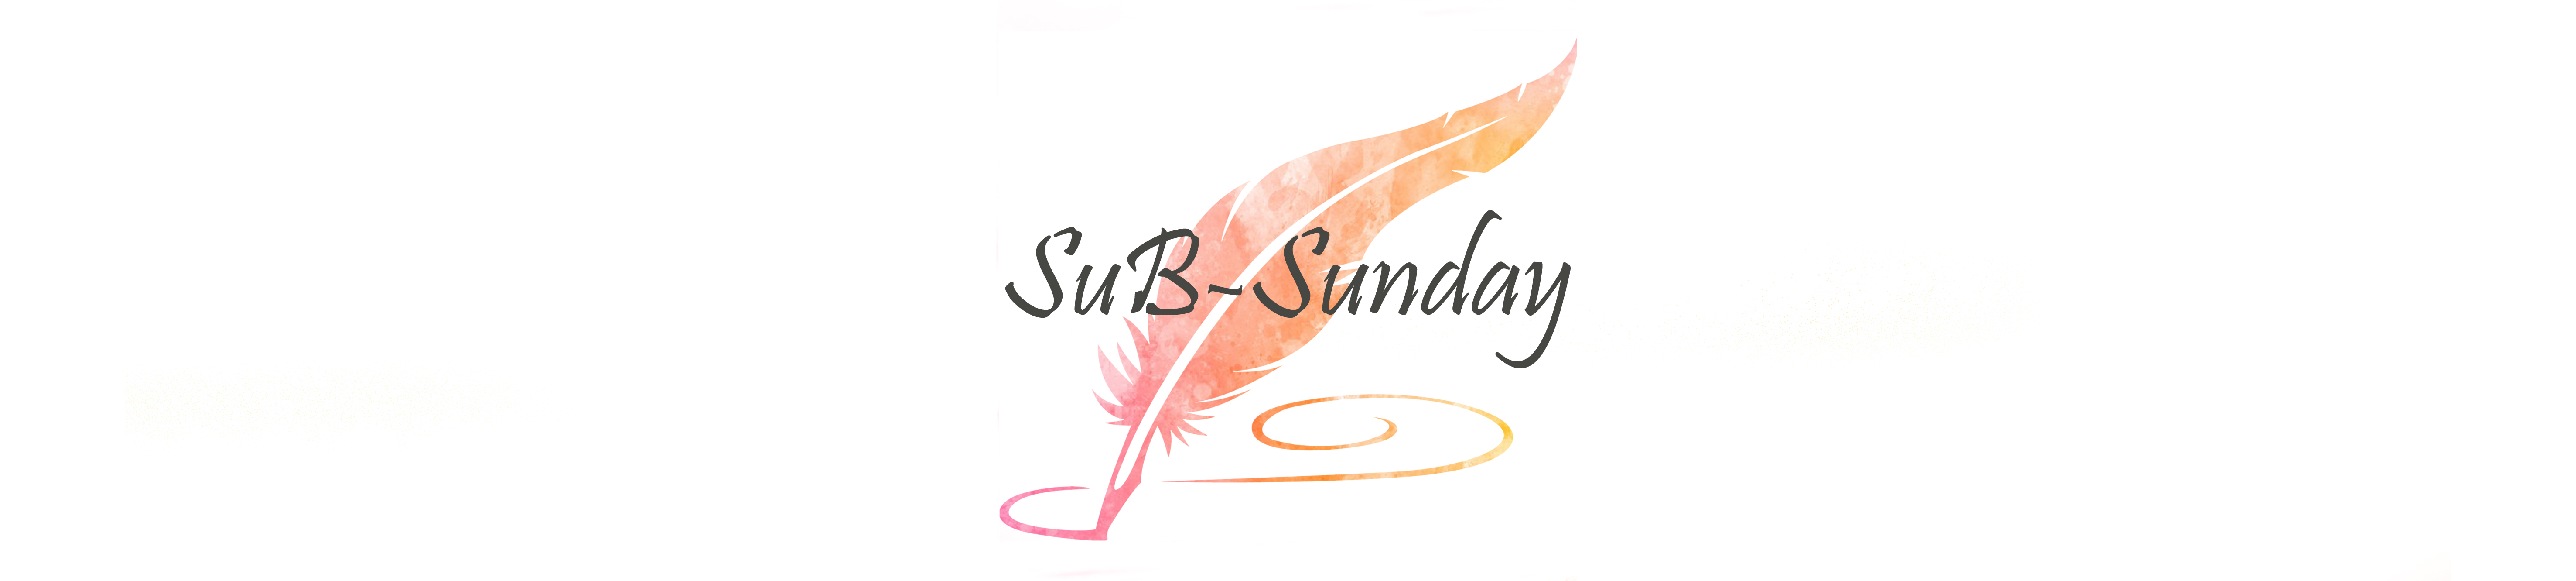 SuB-Sunday Banner